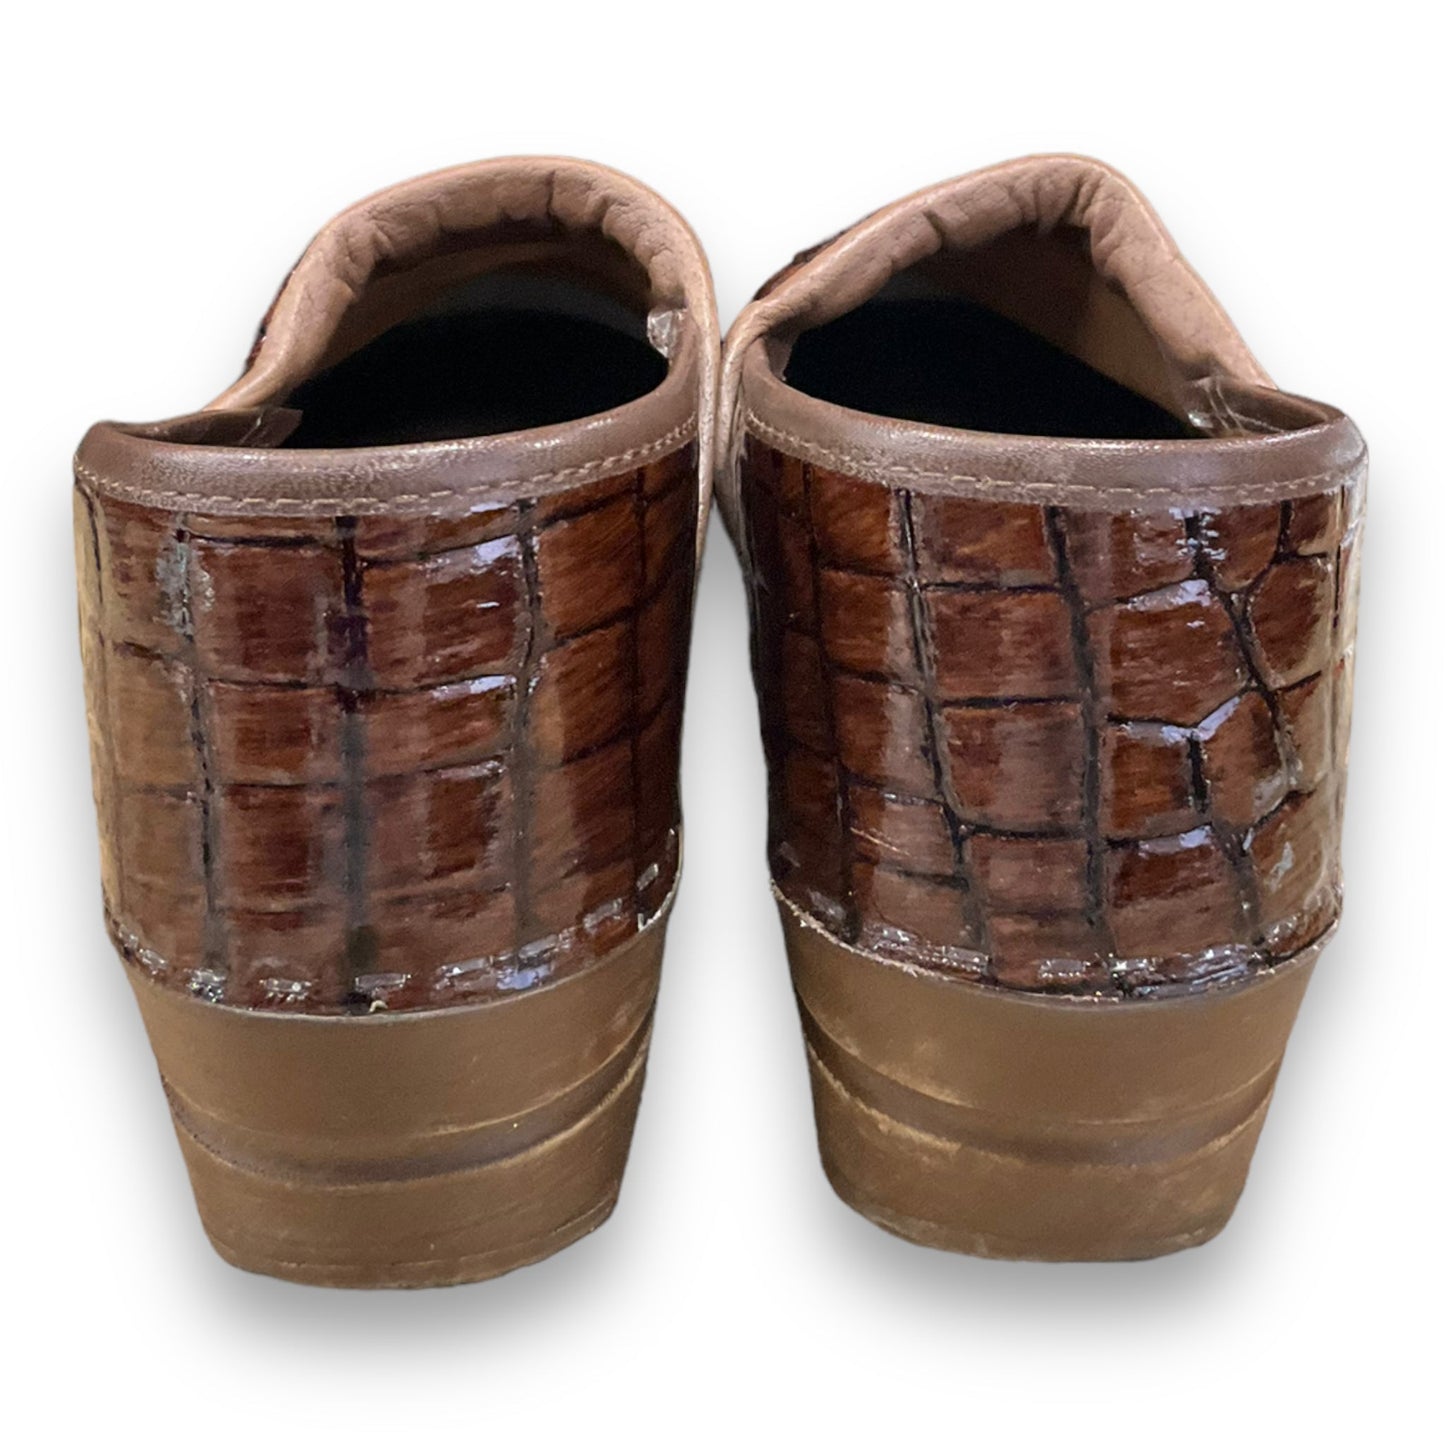 Shoes Flats Mule & Slide By Sanita  Size: 9